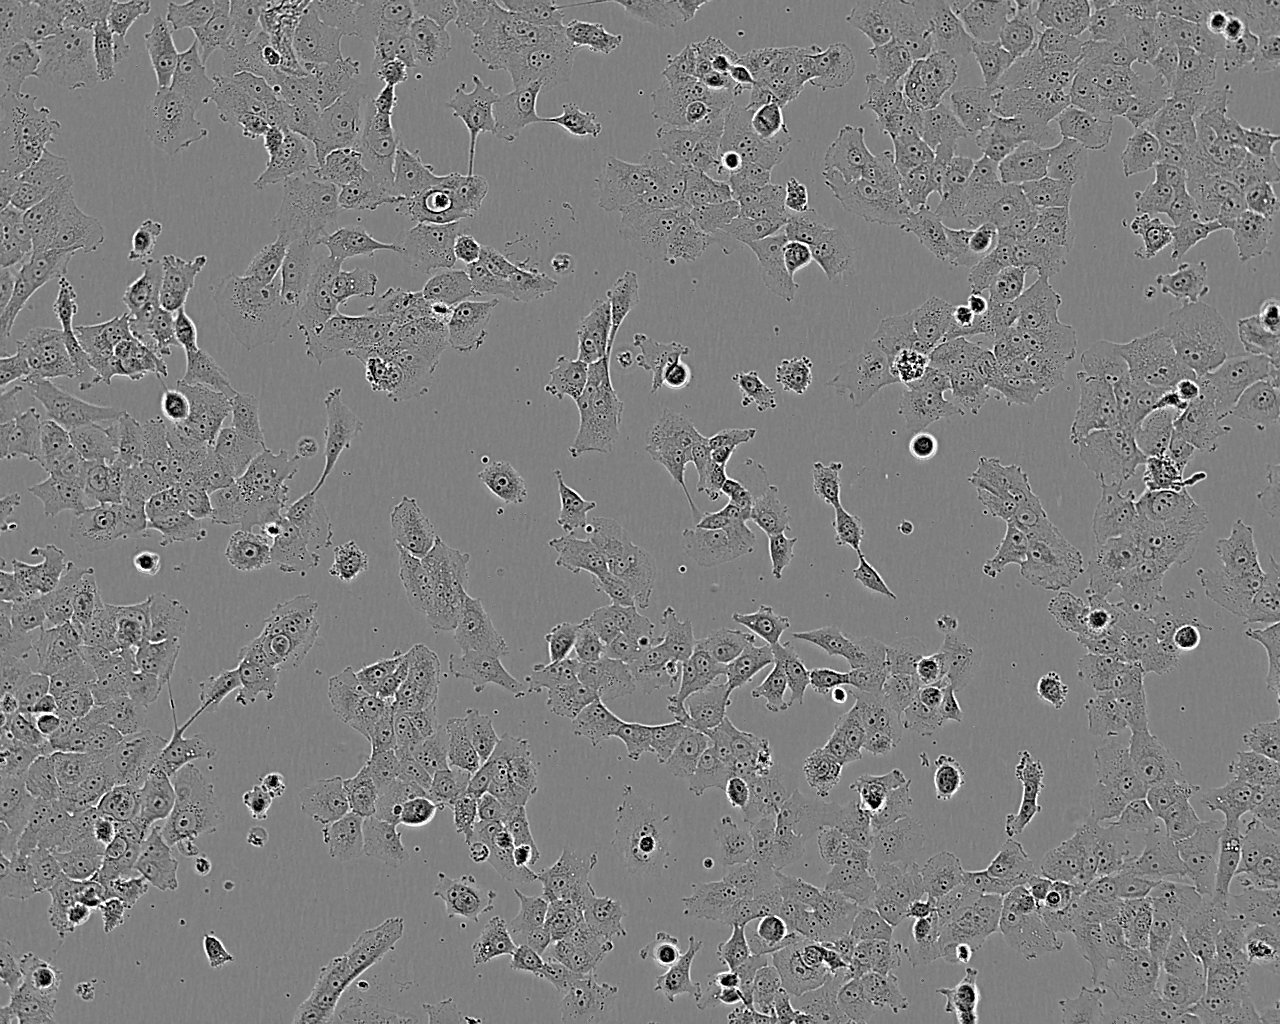 NCI-H2444细胞：人非小细胞肺癌细胞系,NCI-H2444